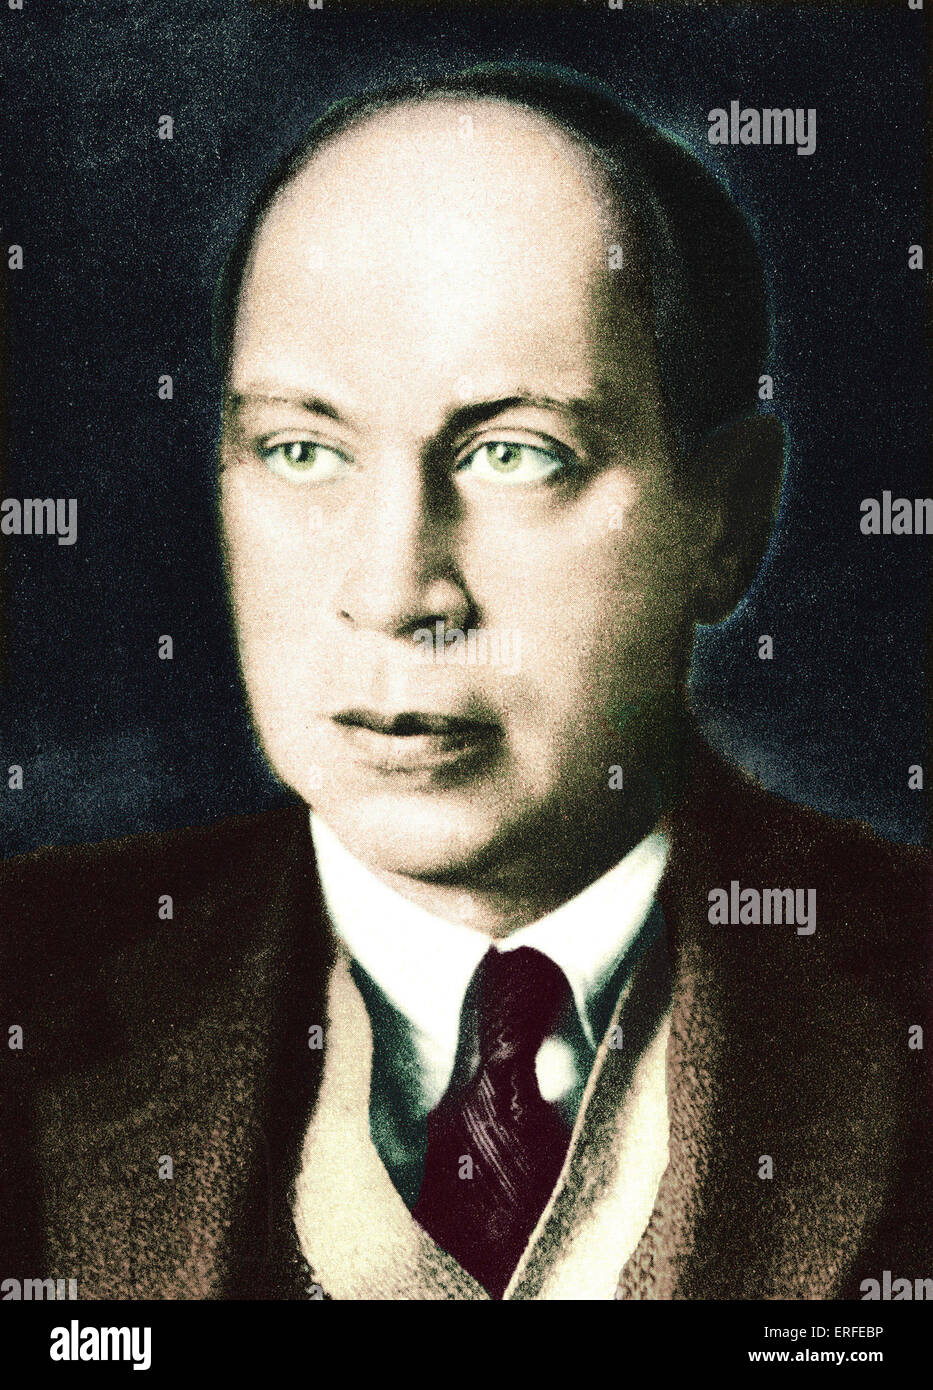 Sergei Prokofiev portrait. Russian composer, 1891-1953 Stock Photo